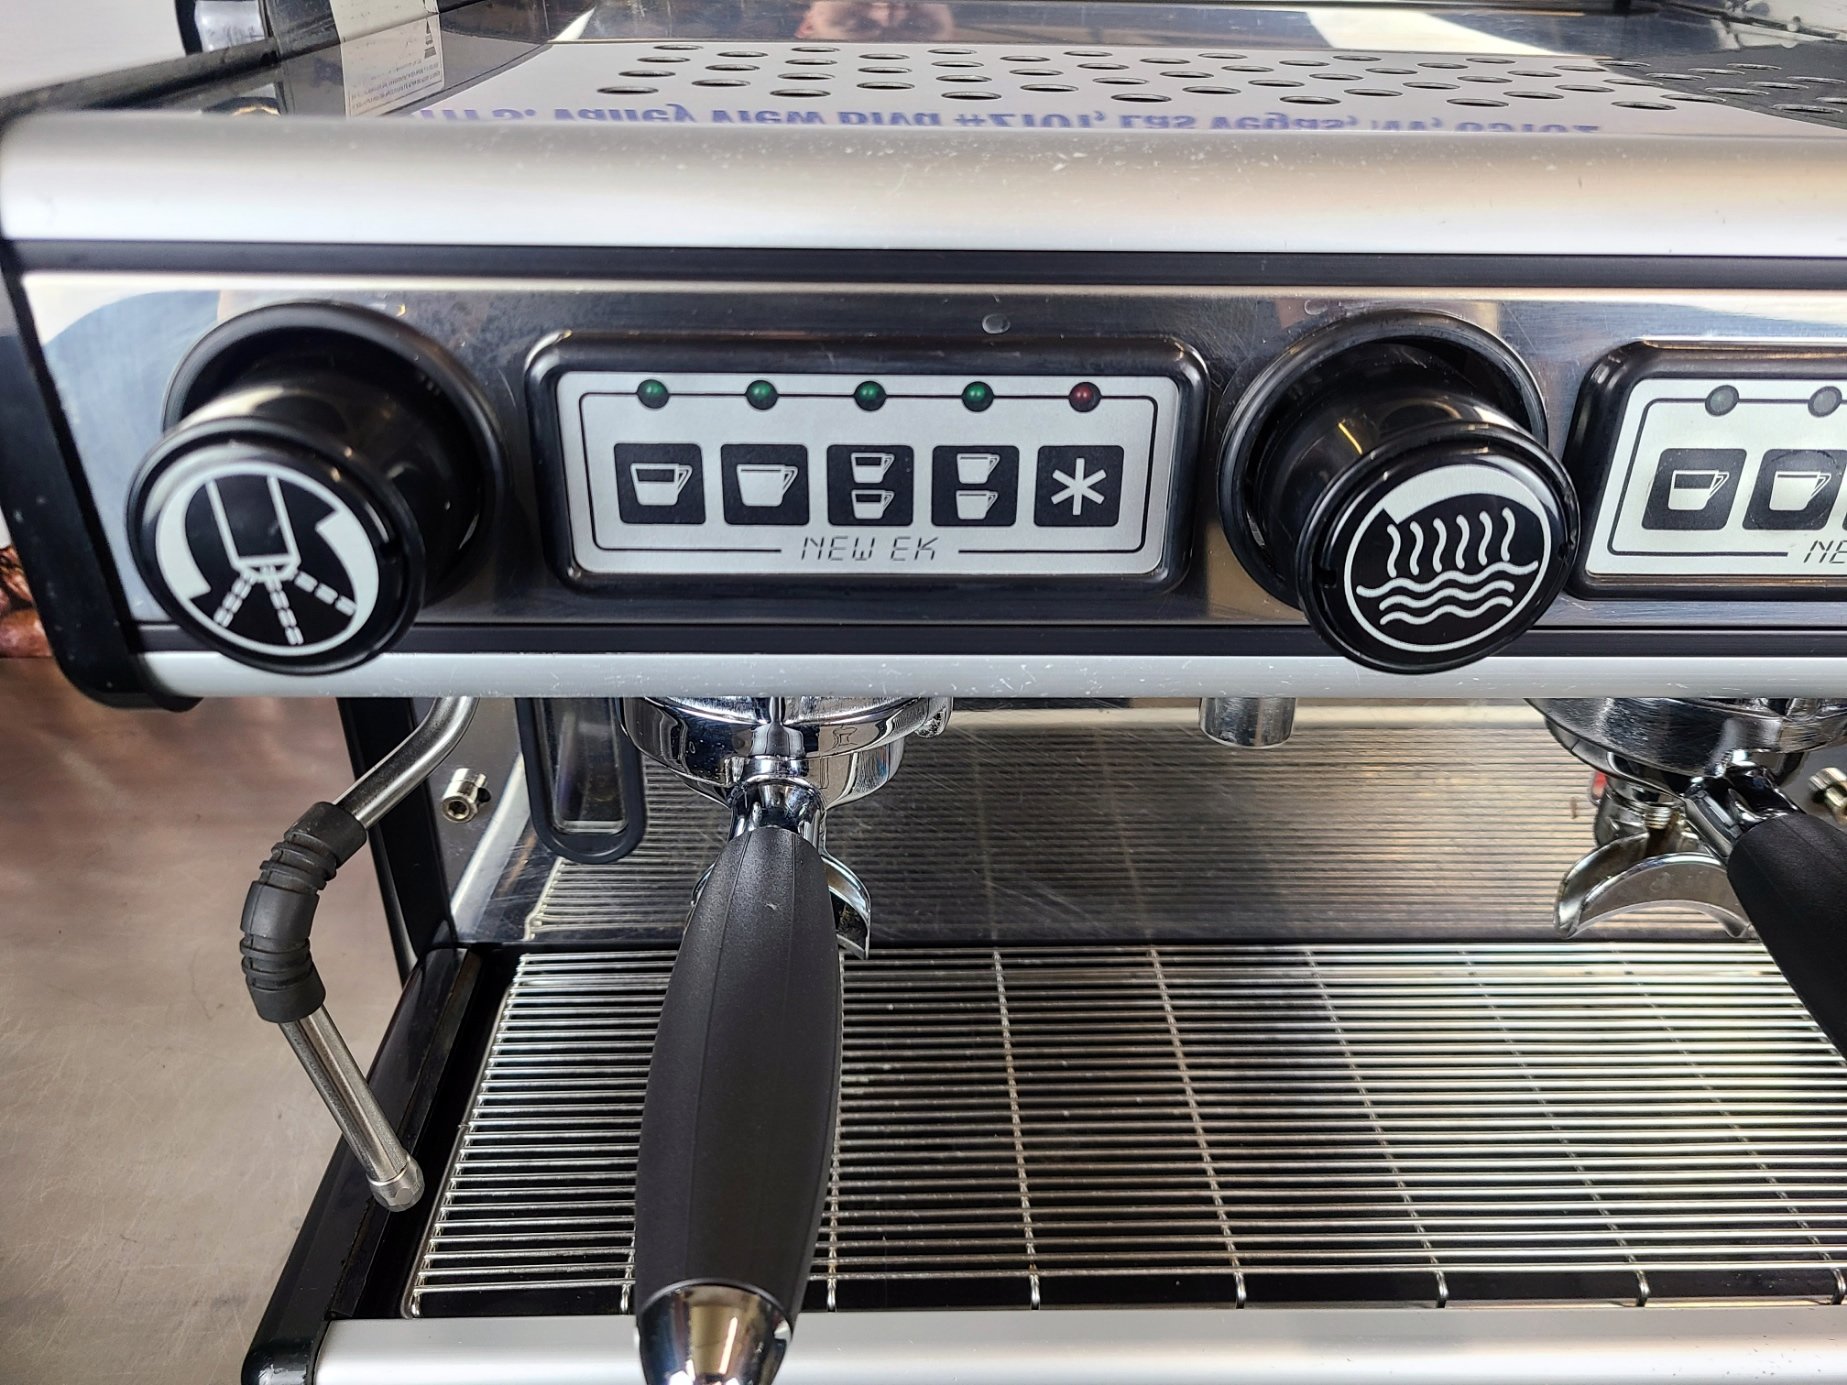 La Spaziale S2 2 Group Volumetric Commercial Espresso Machine